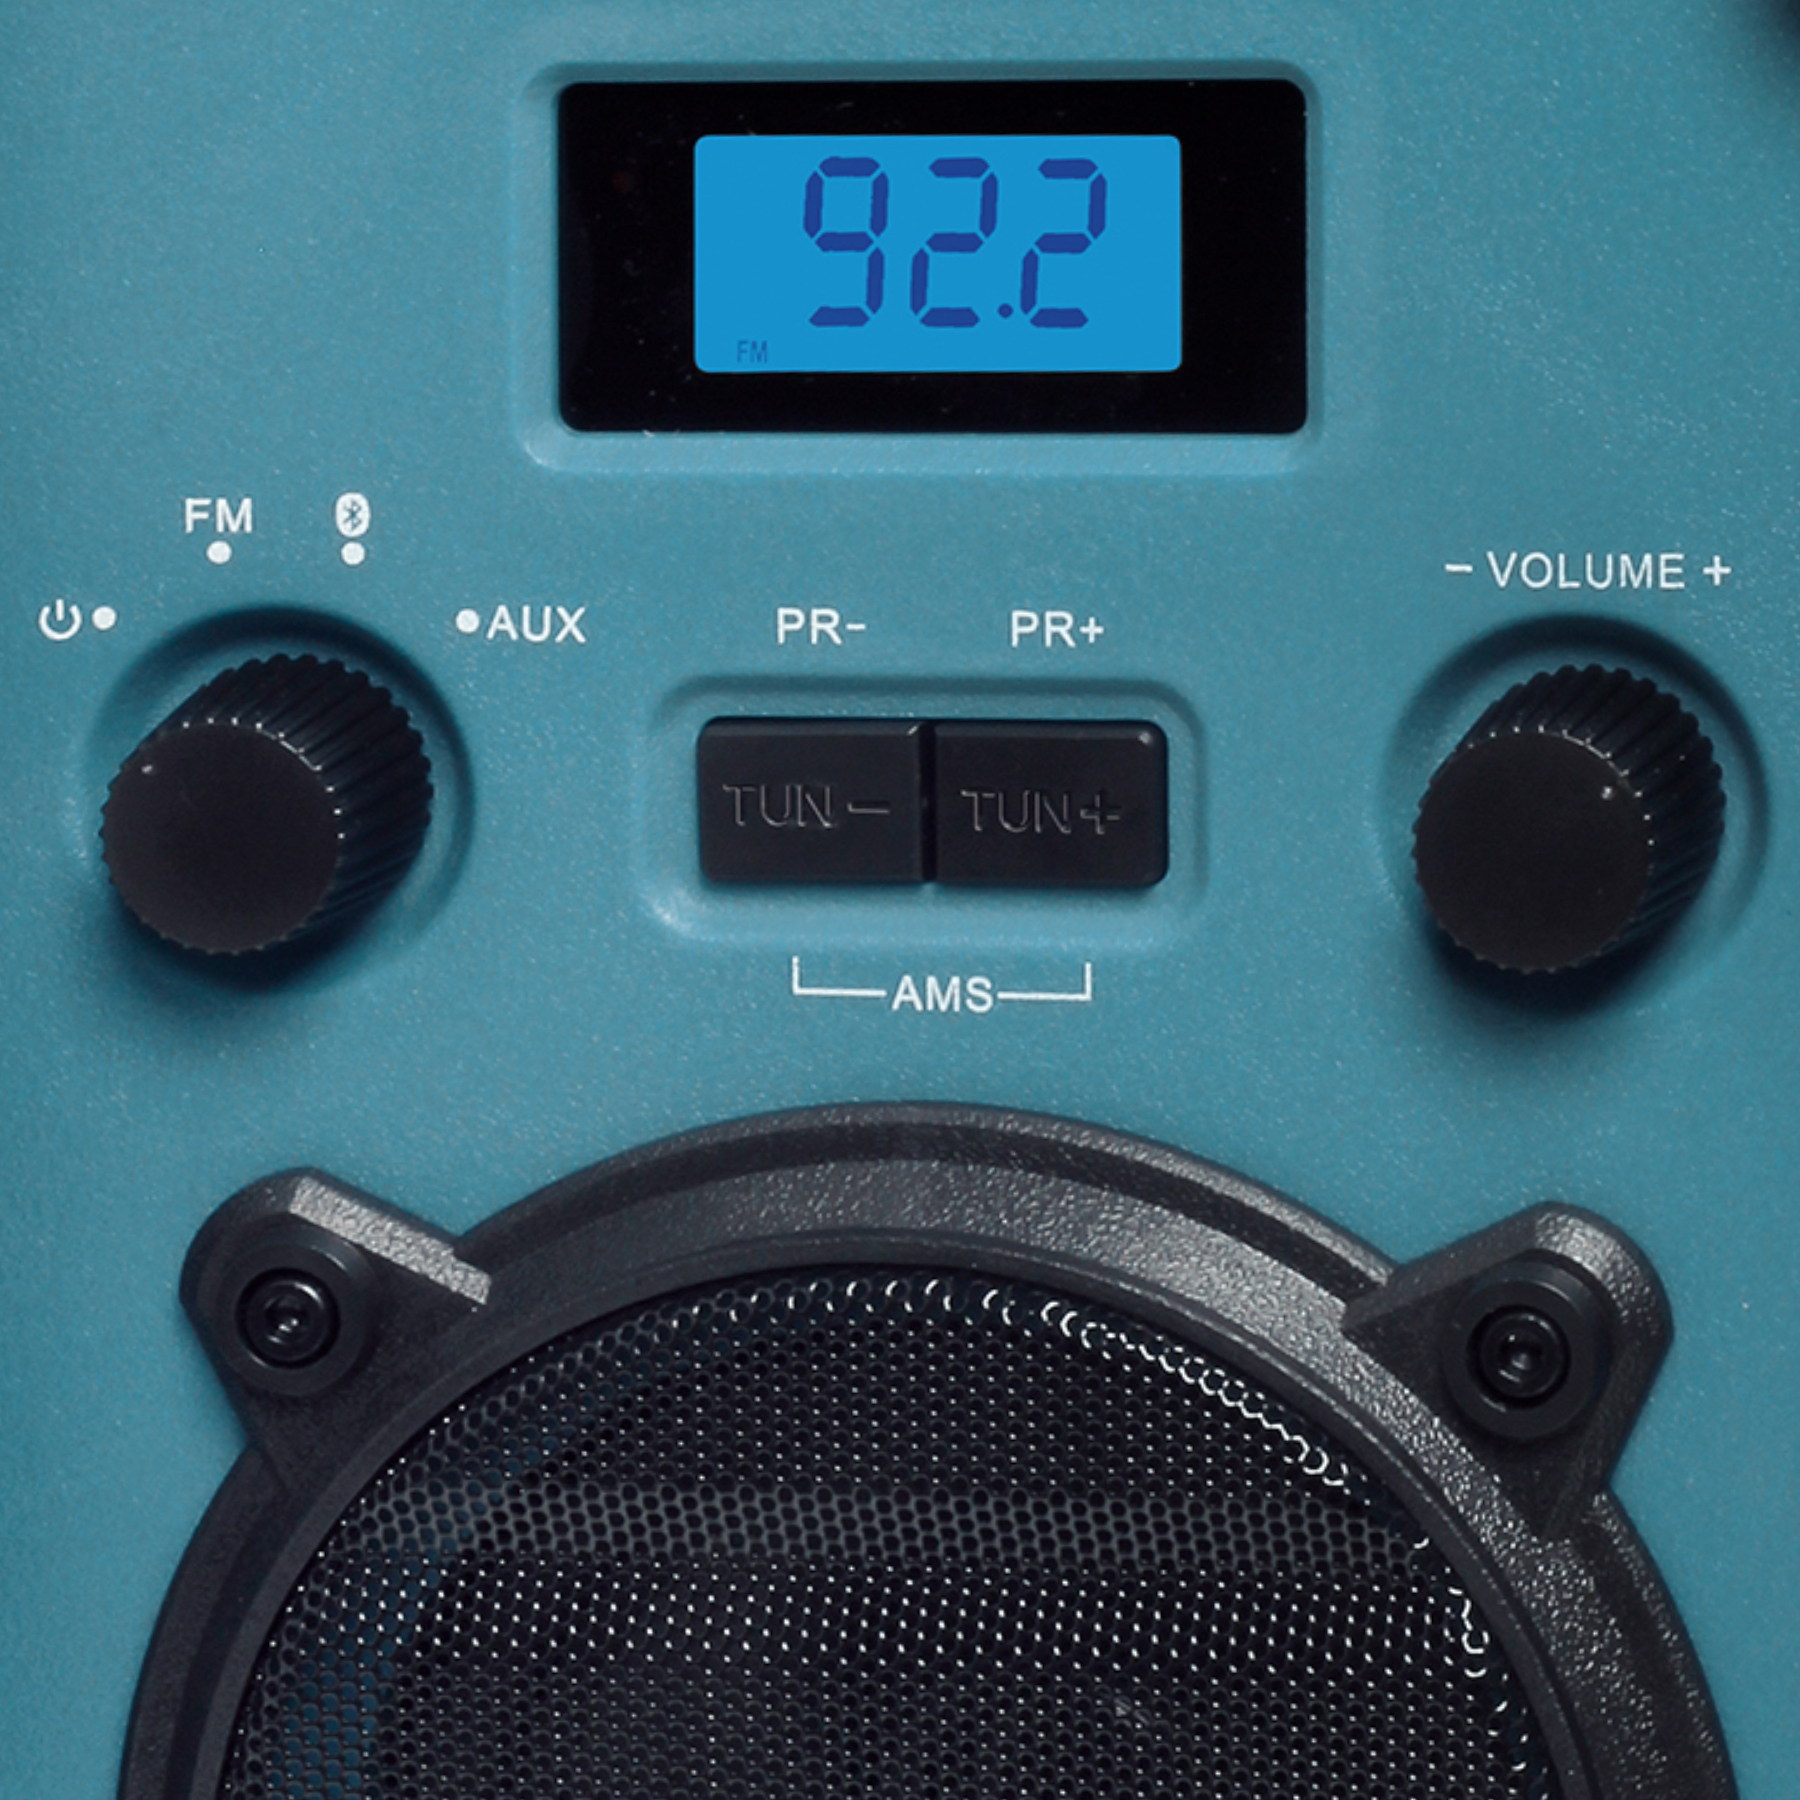 BLAUPUNKT Baustellenradio mit Bluetooth Radio, 20 BSR Petrol | FM, Bluetooth